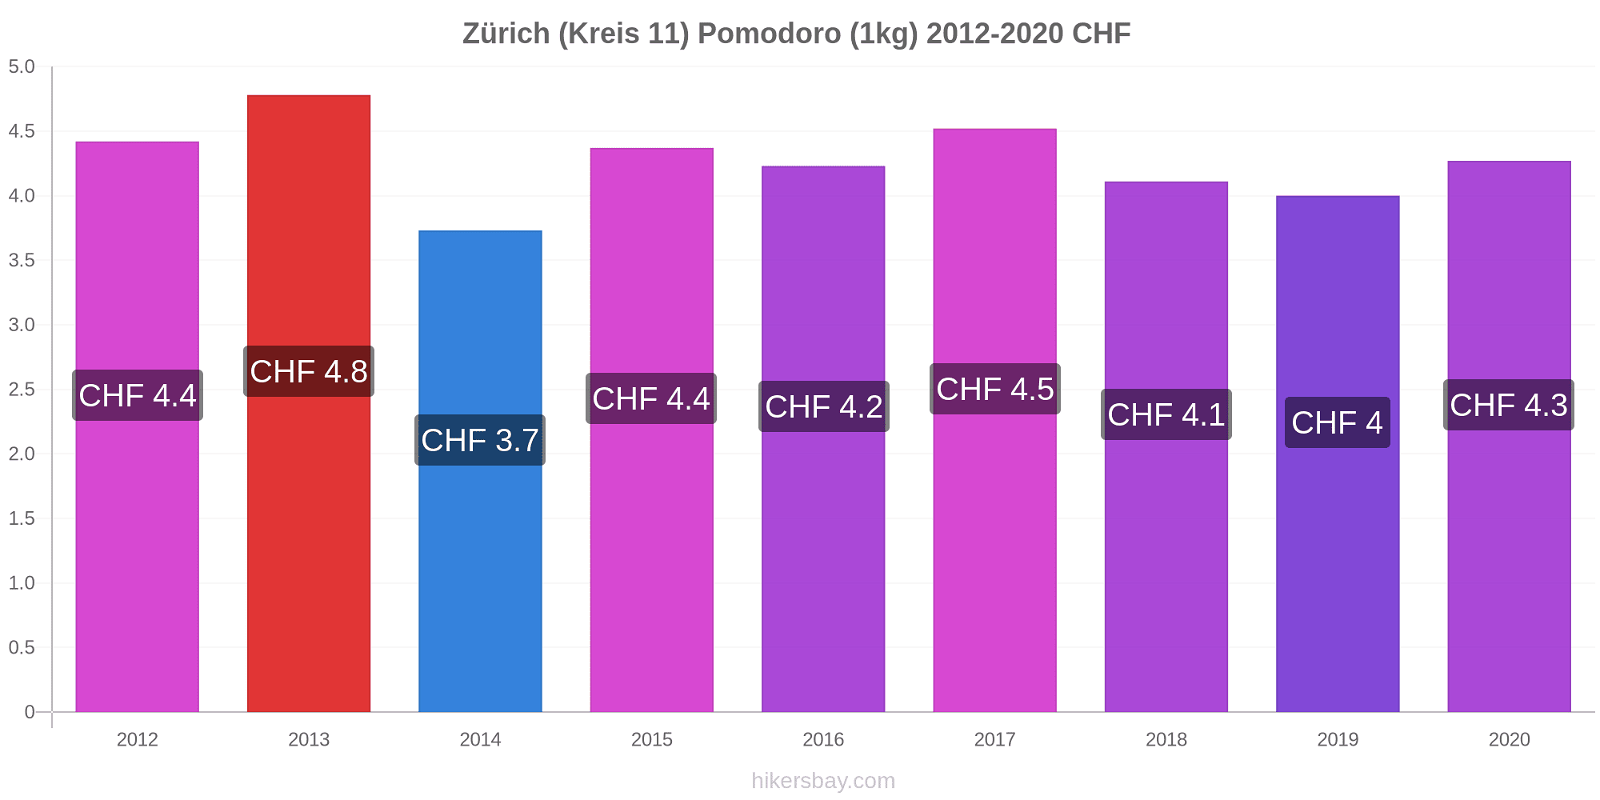 Zürich (Kreis 11) variazioni di prezzo Pomodoro (1kg) hikersbay.com